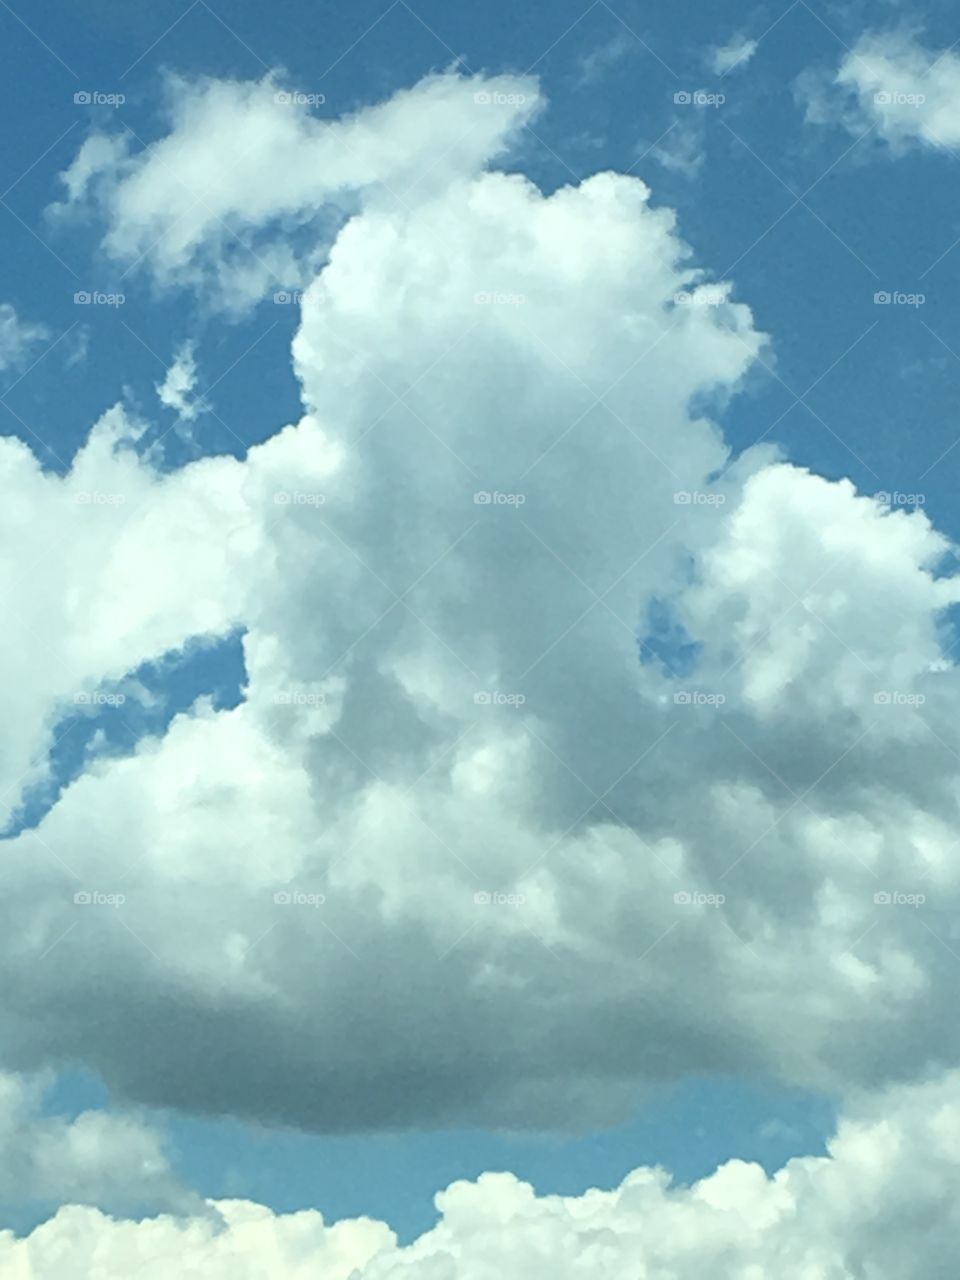 Billowing cloud